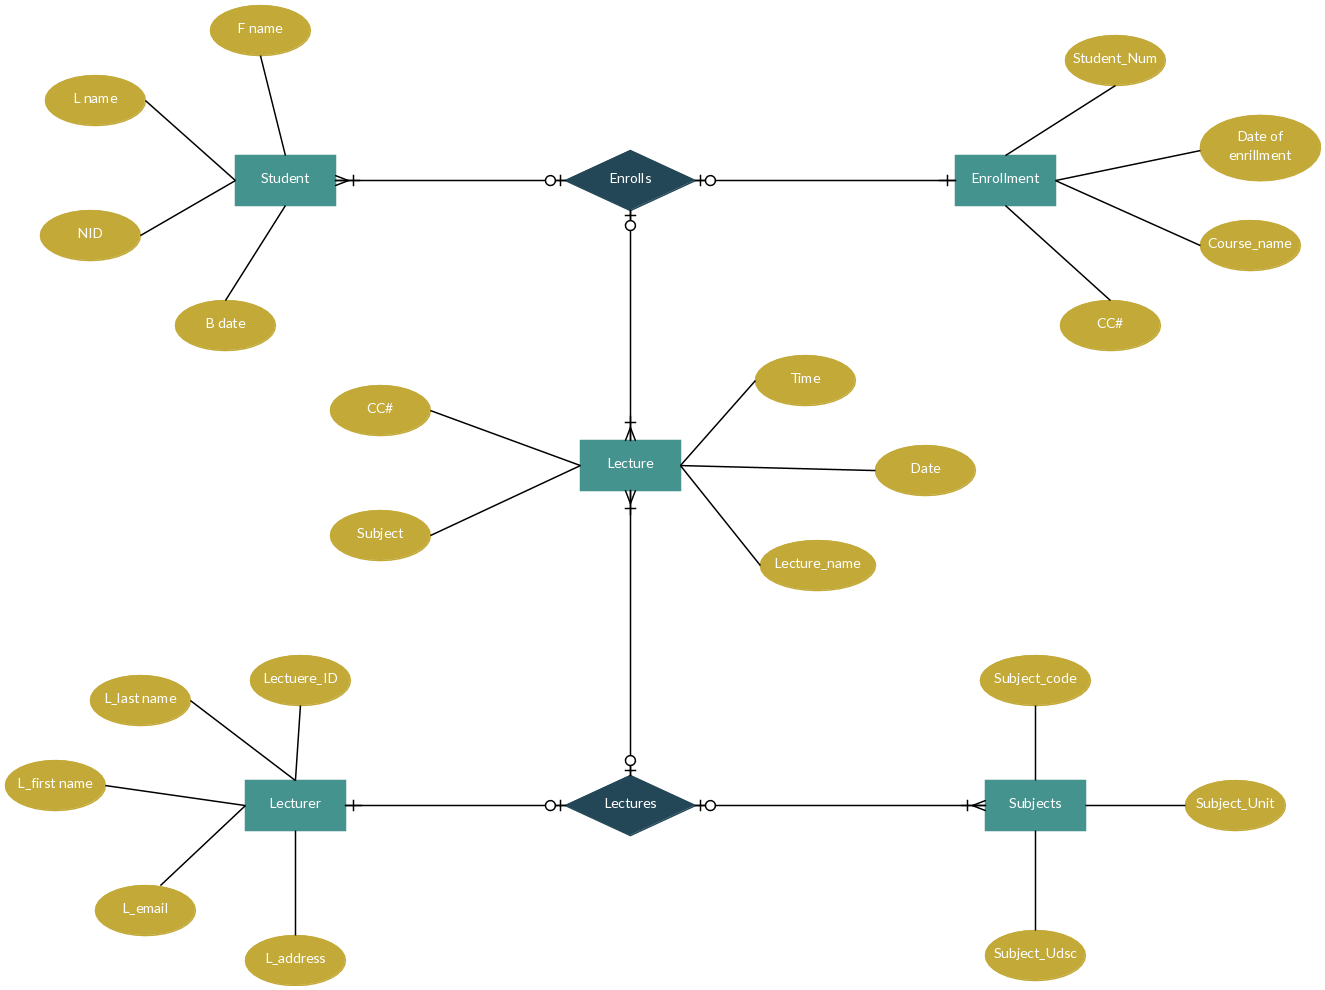 Entity Relationship Diagram For Collage Enrollment System